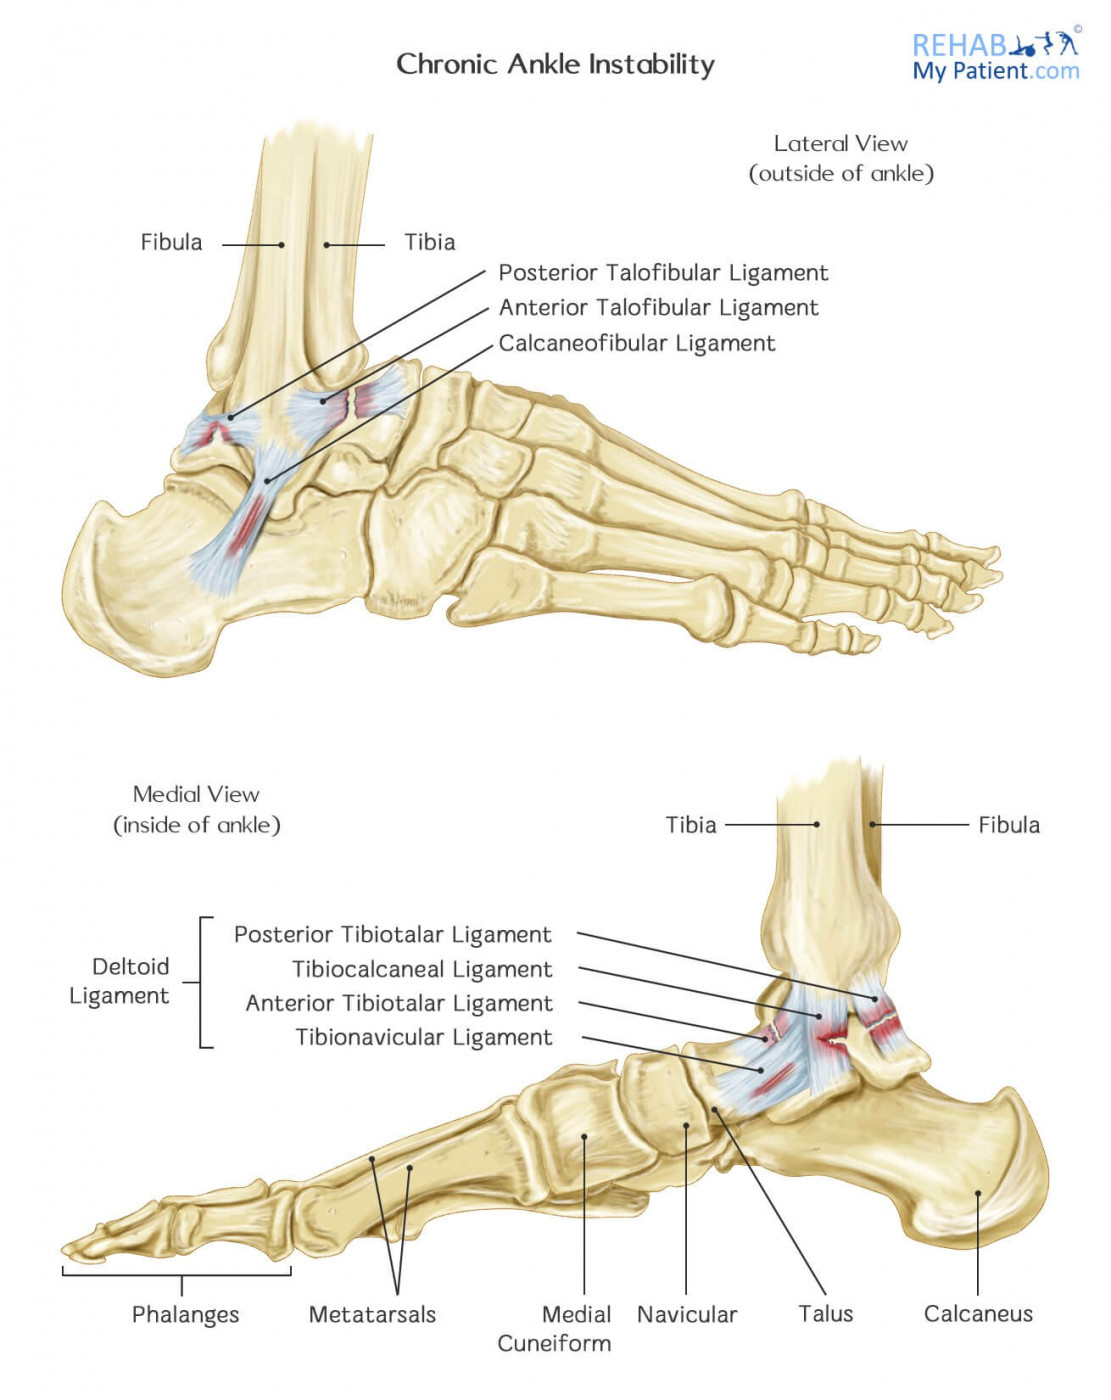 https://www.rehabmypatient.com/media/uploads/articles/chronic_ankle_instability.jpg